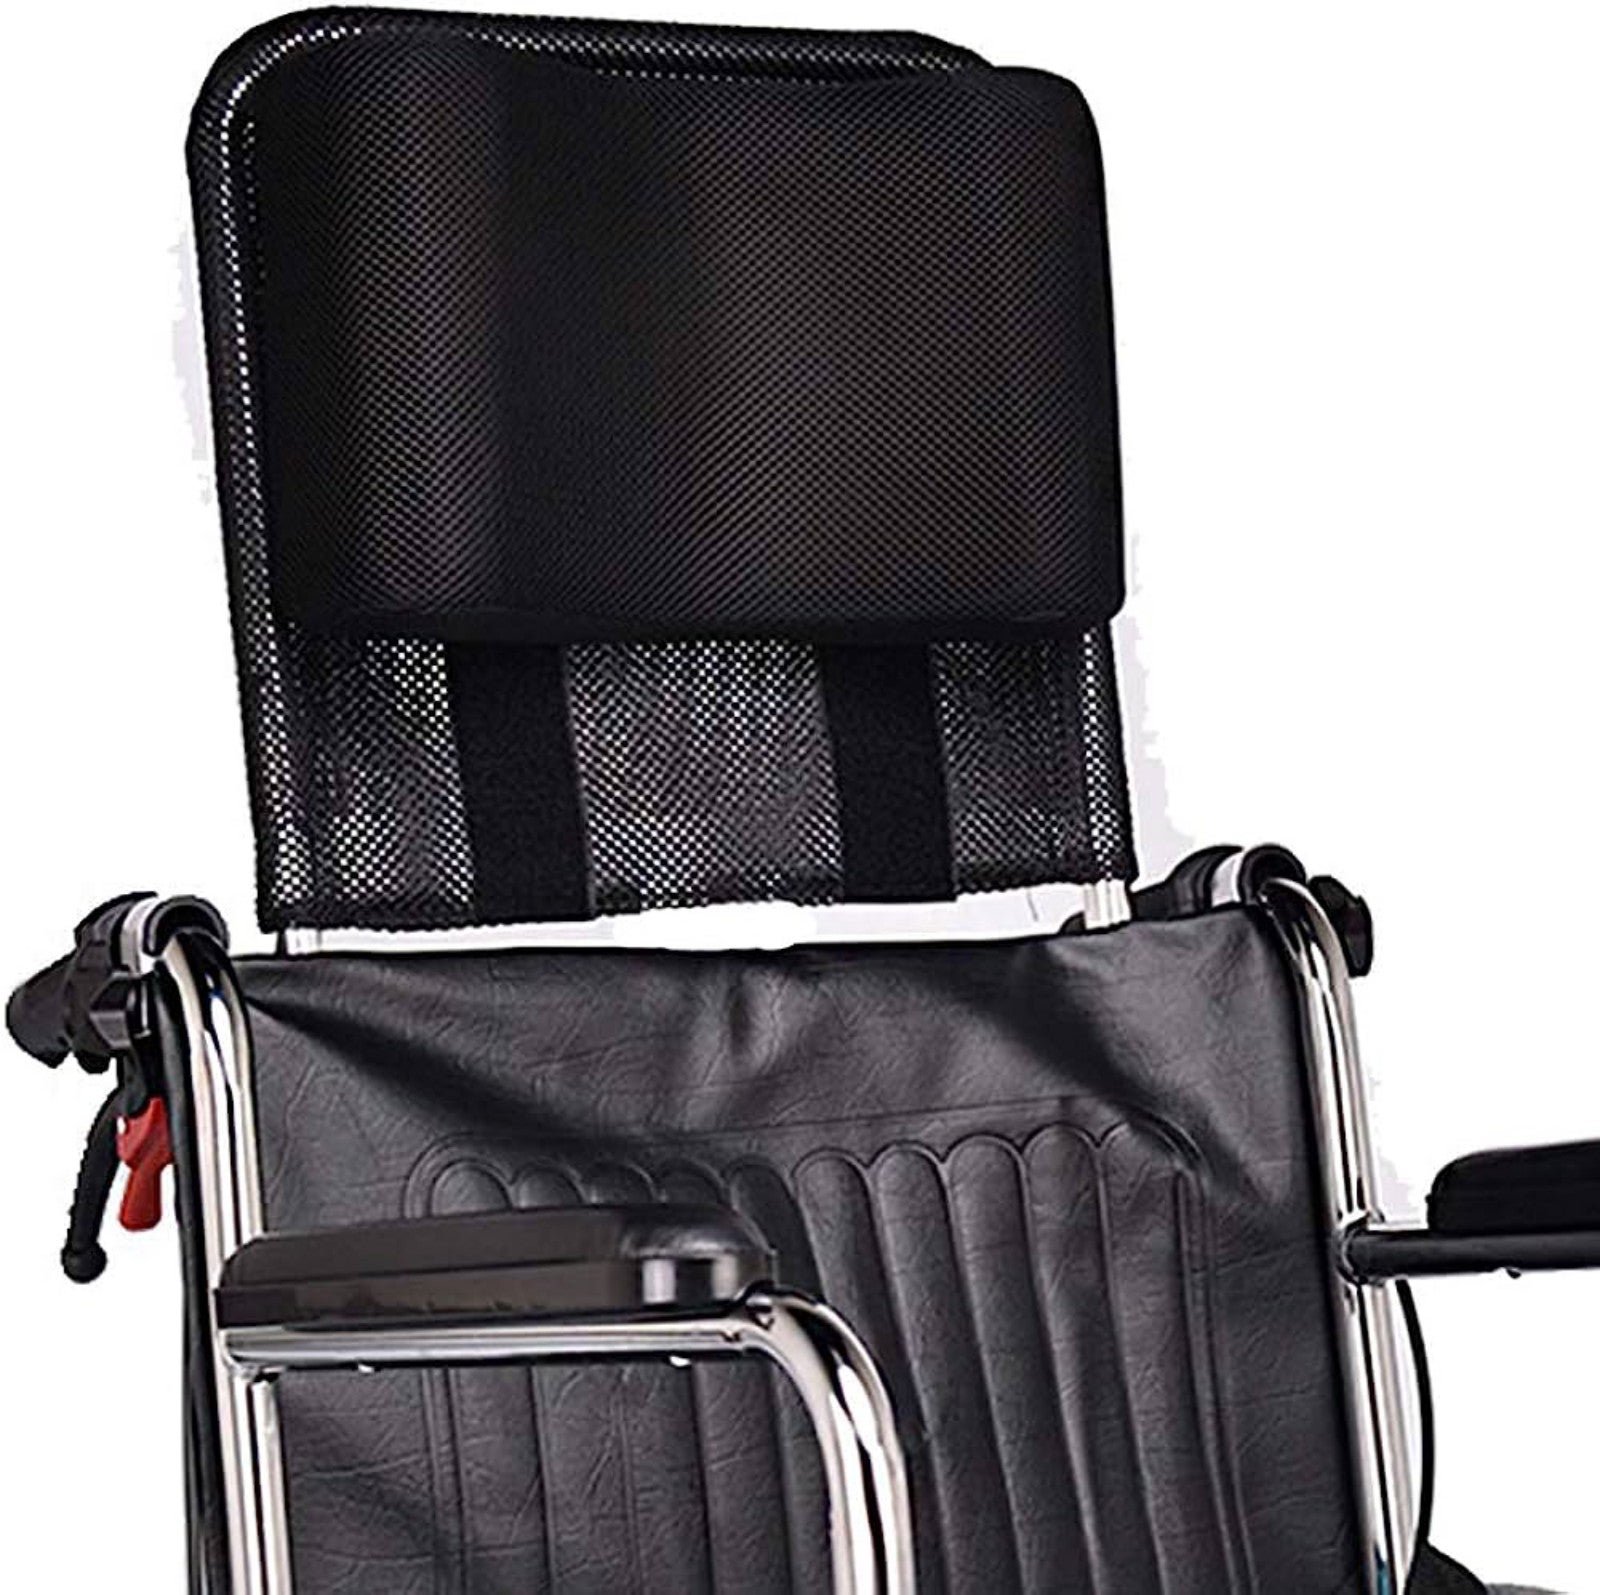 Wheelchair pillow for neck support 1bW4sSGki